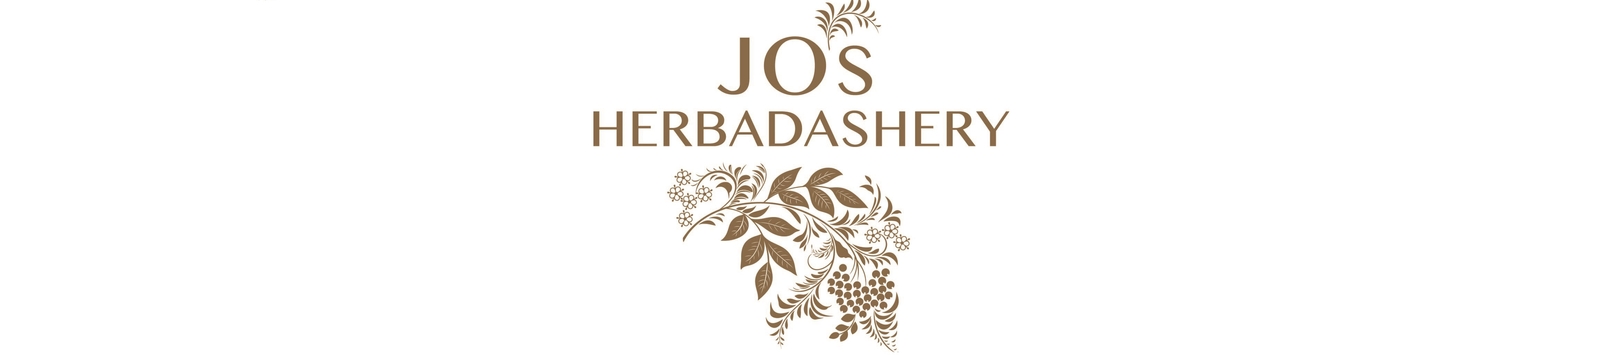 Jo's Herbadashery